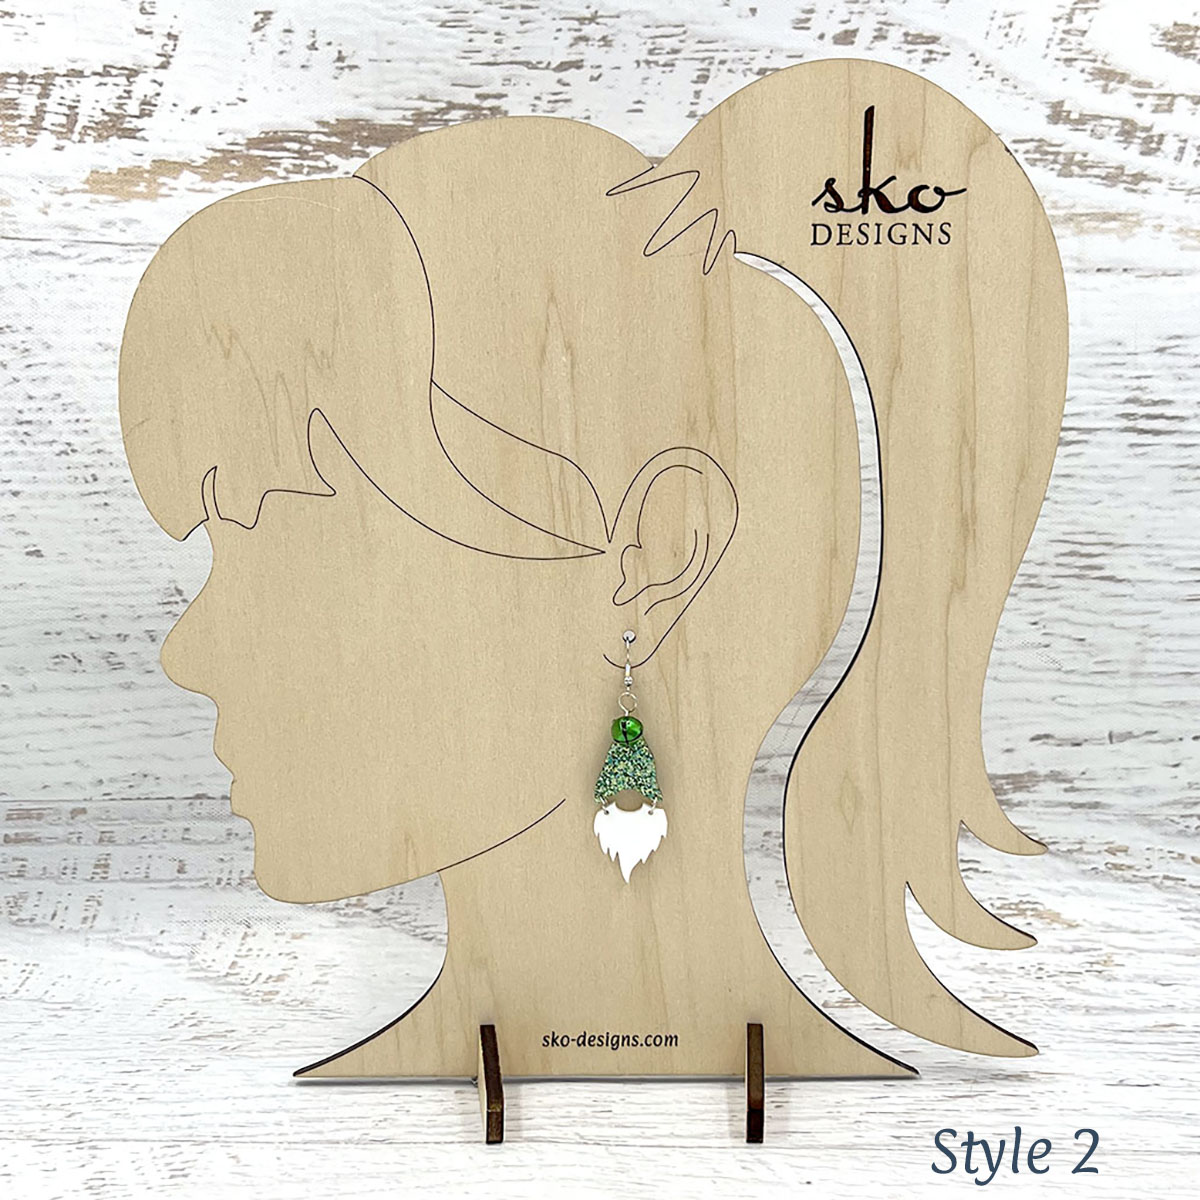 Gnome Earrings Green Glitter Style 2